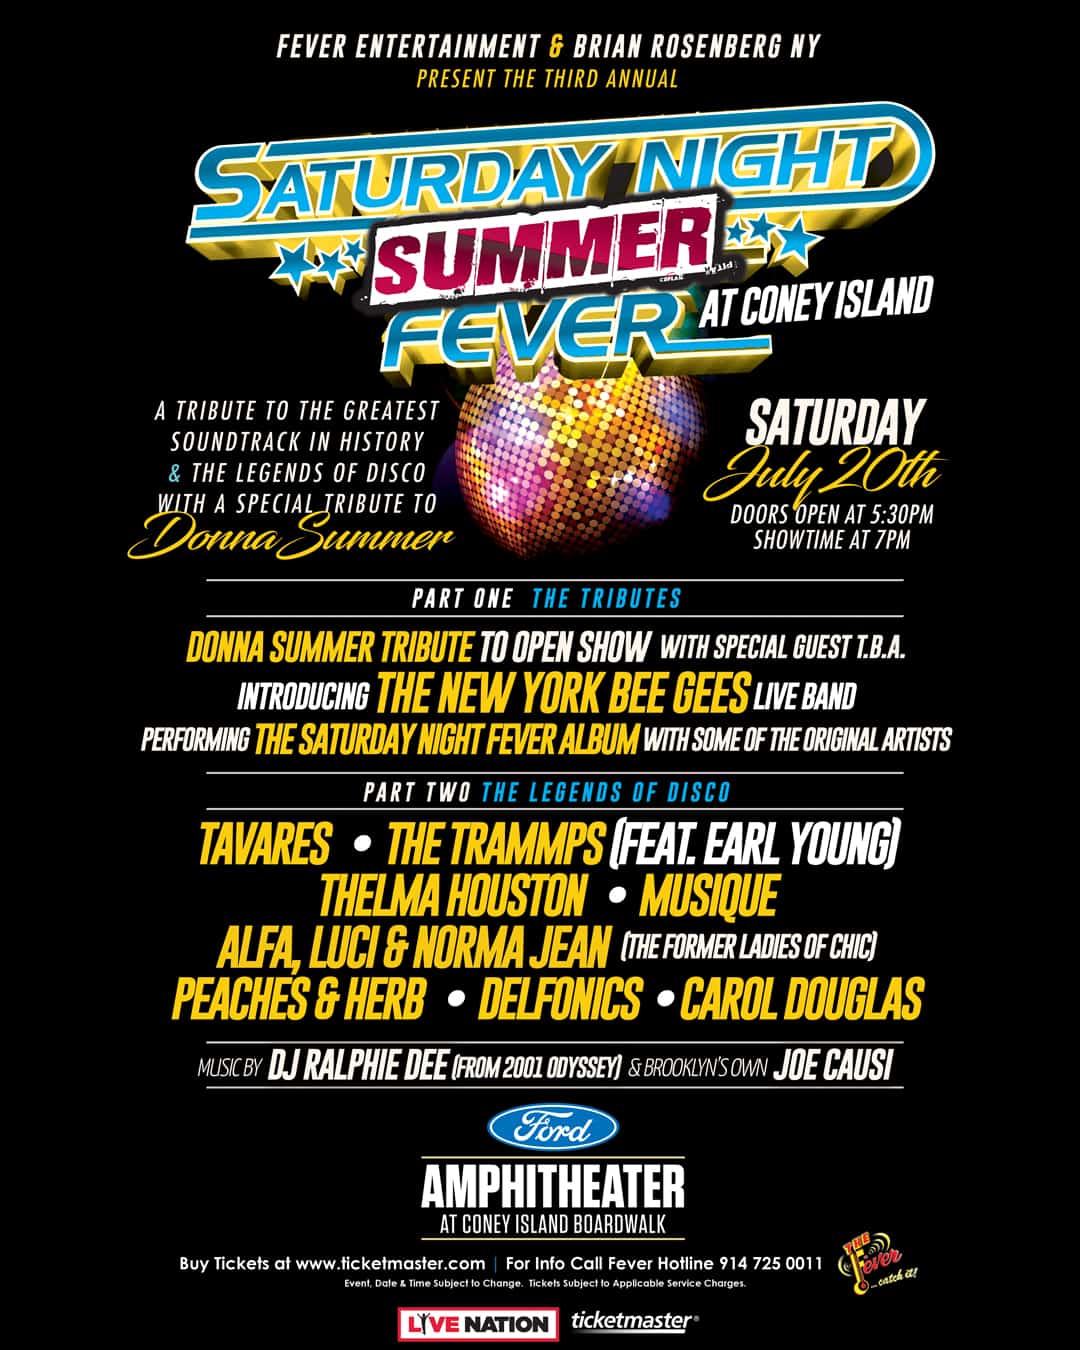 Saturday Night Summer fever artist lineup